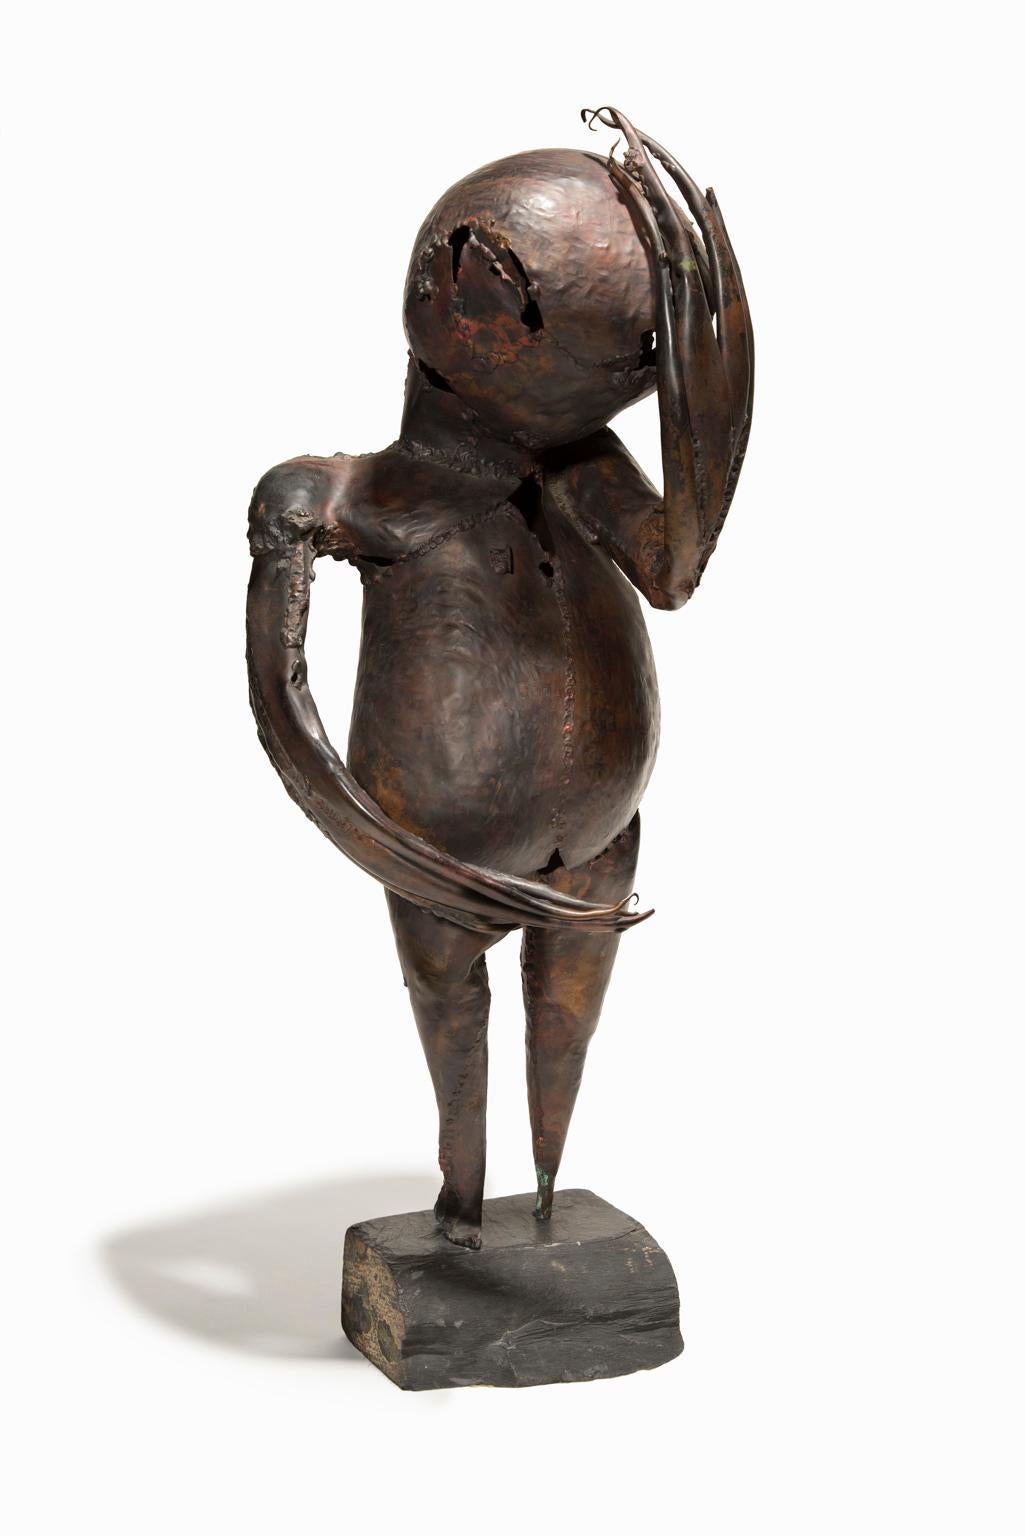  Reinhoud dHaese Sculpture Mythical Figure Copper & Stone - Black Figurative Sculpture by Reinhoud d'Haese